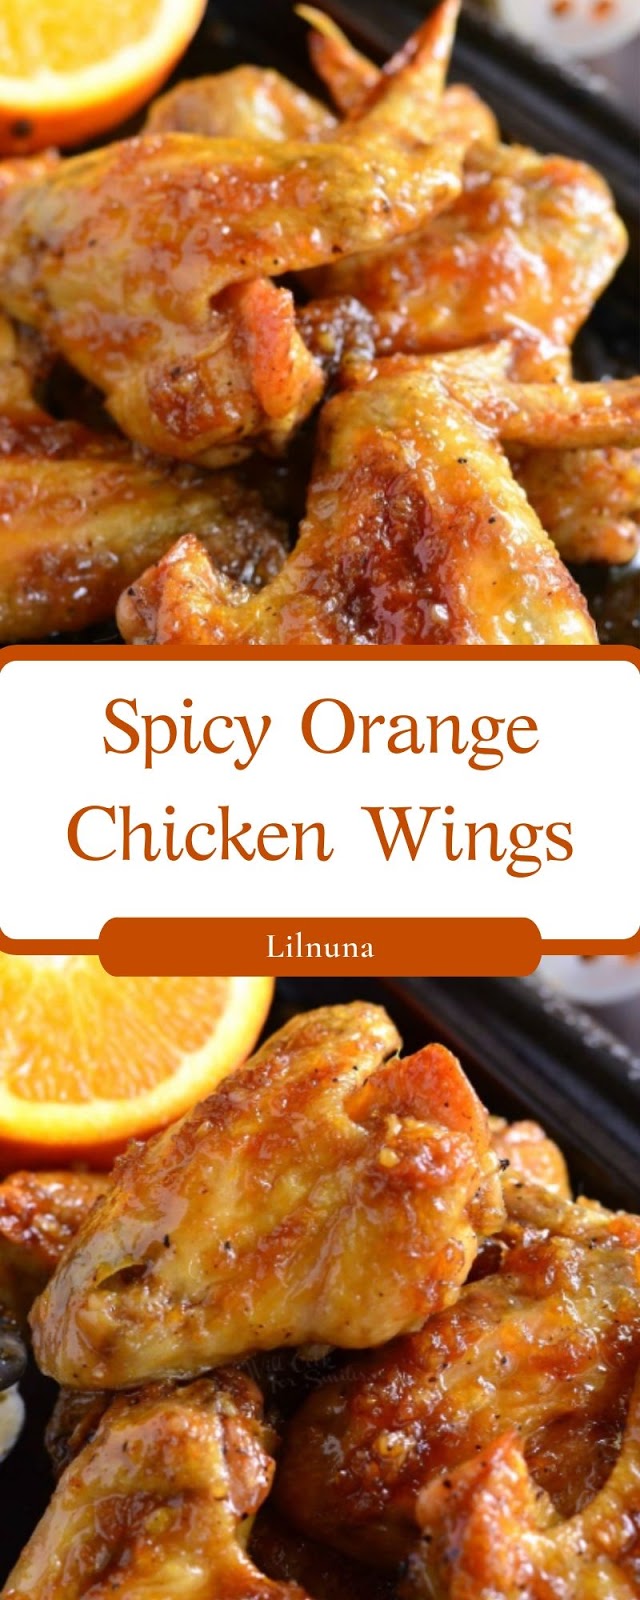 Spicy Orange Chicken Wings